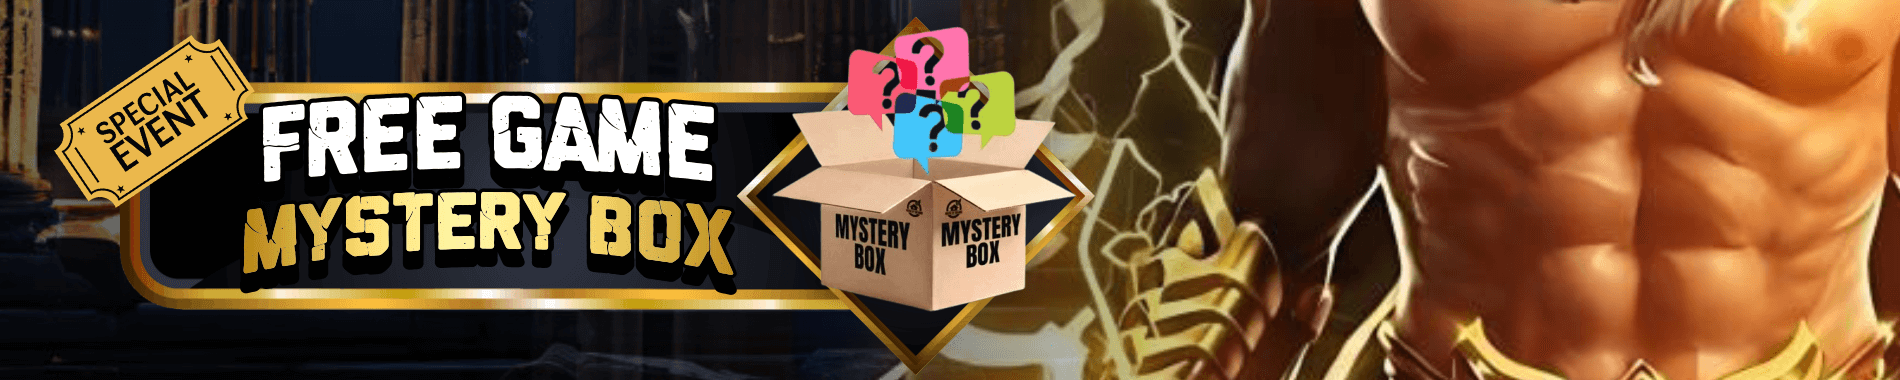 MYSTERY BOX PIN4D